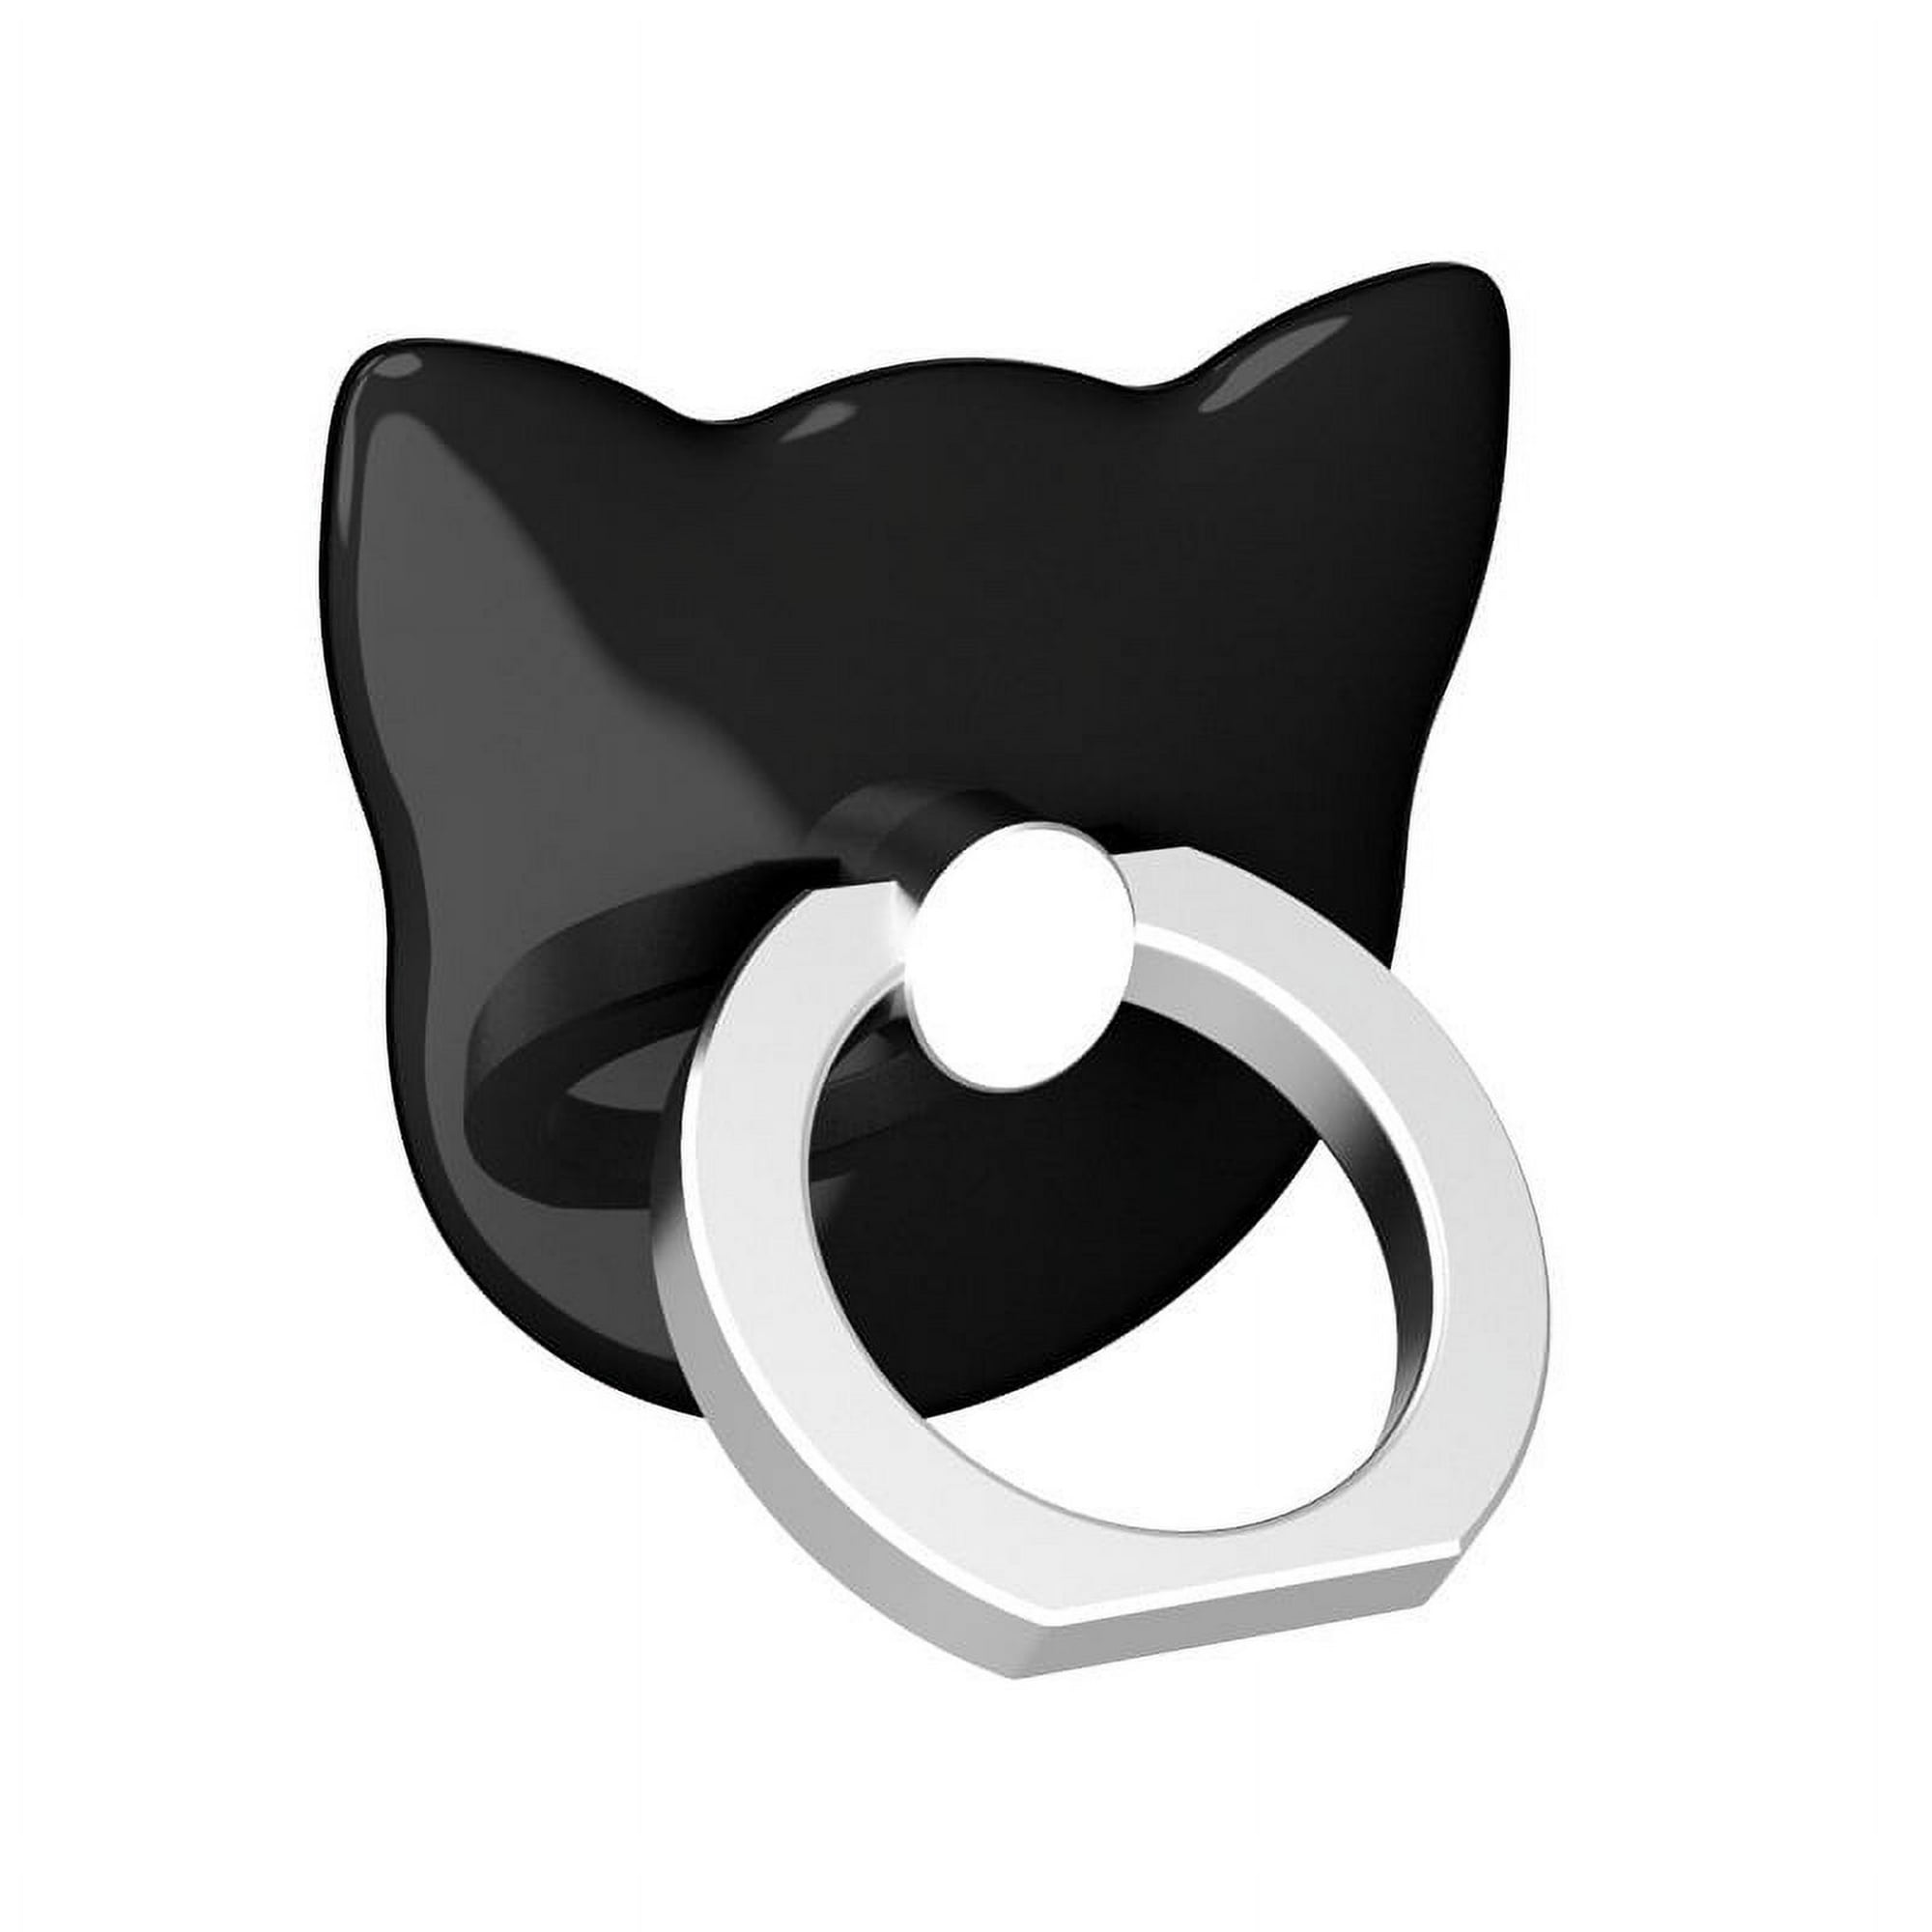 Soporte para teléfono móvil, anillo universal para soporte de teléfono móvil,  soporte para teléfono inteligente con forma de gato animal